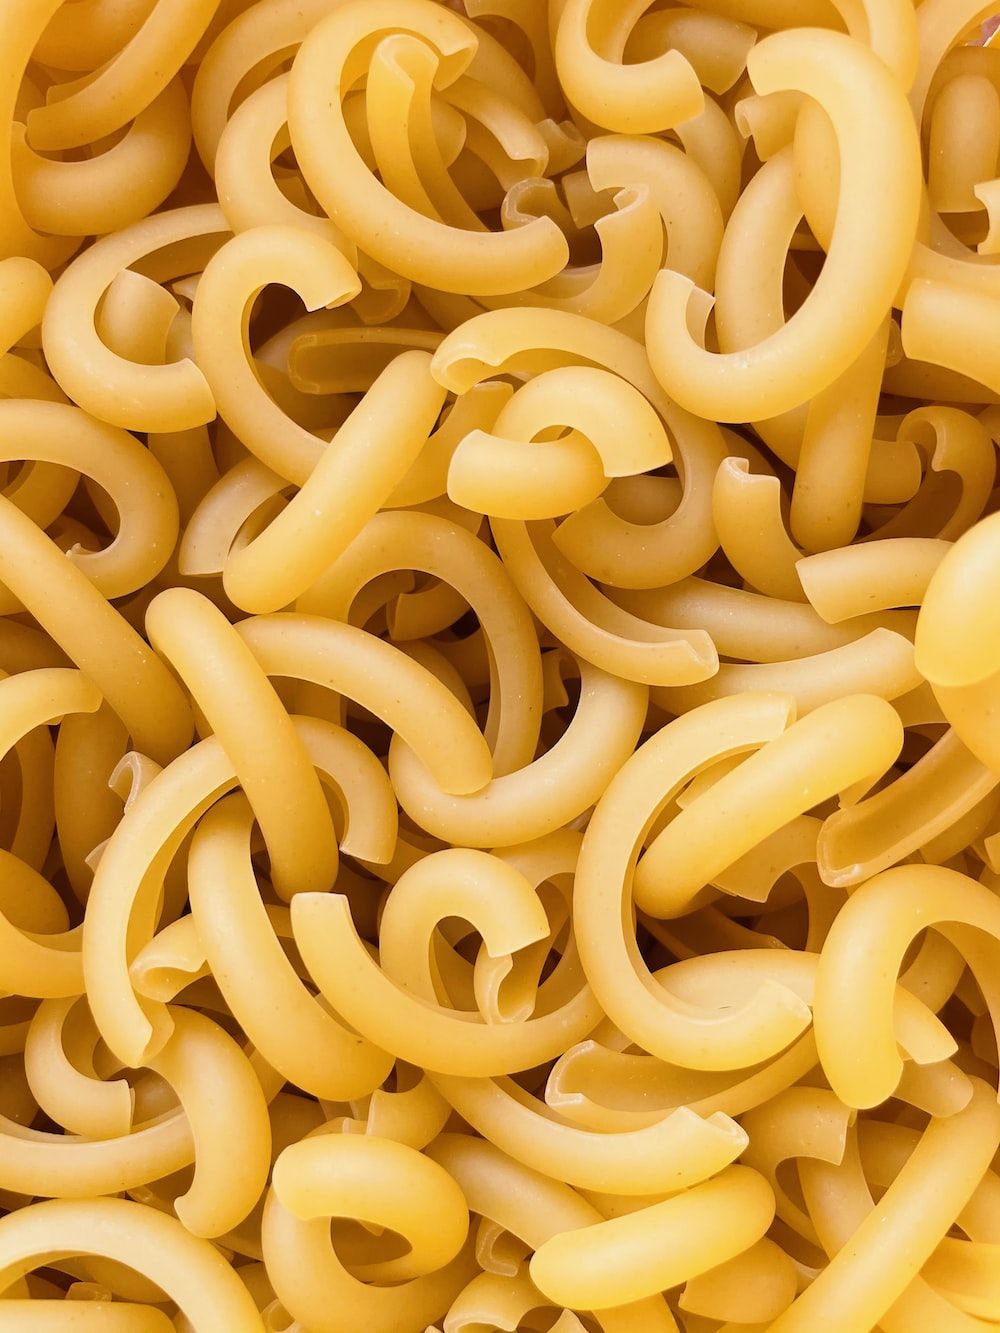 Macaroni Picture. Download Free Image